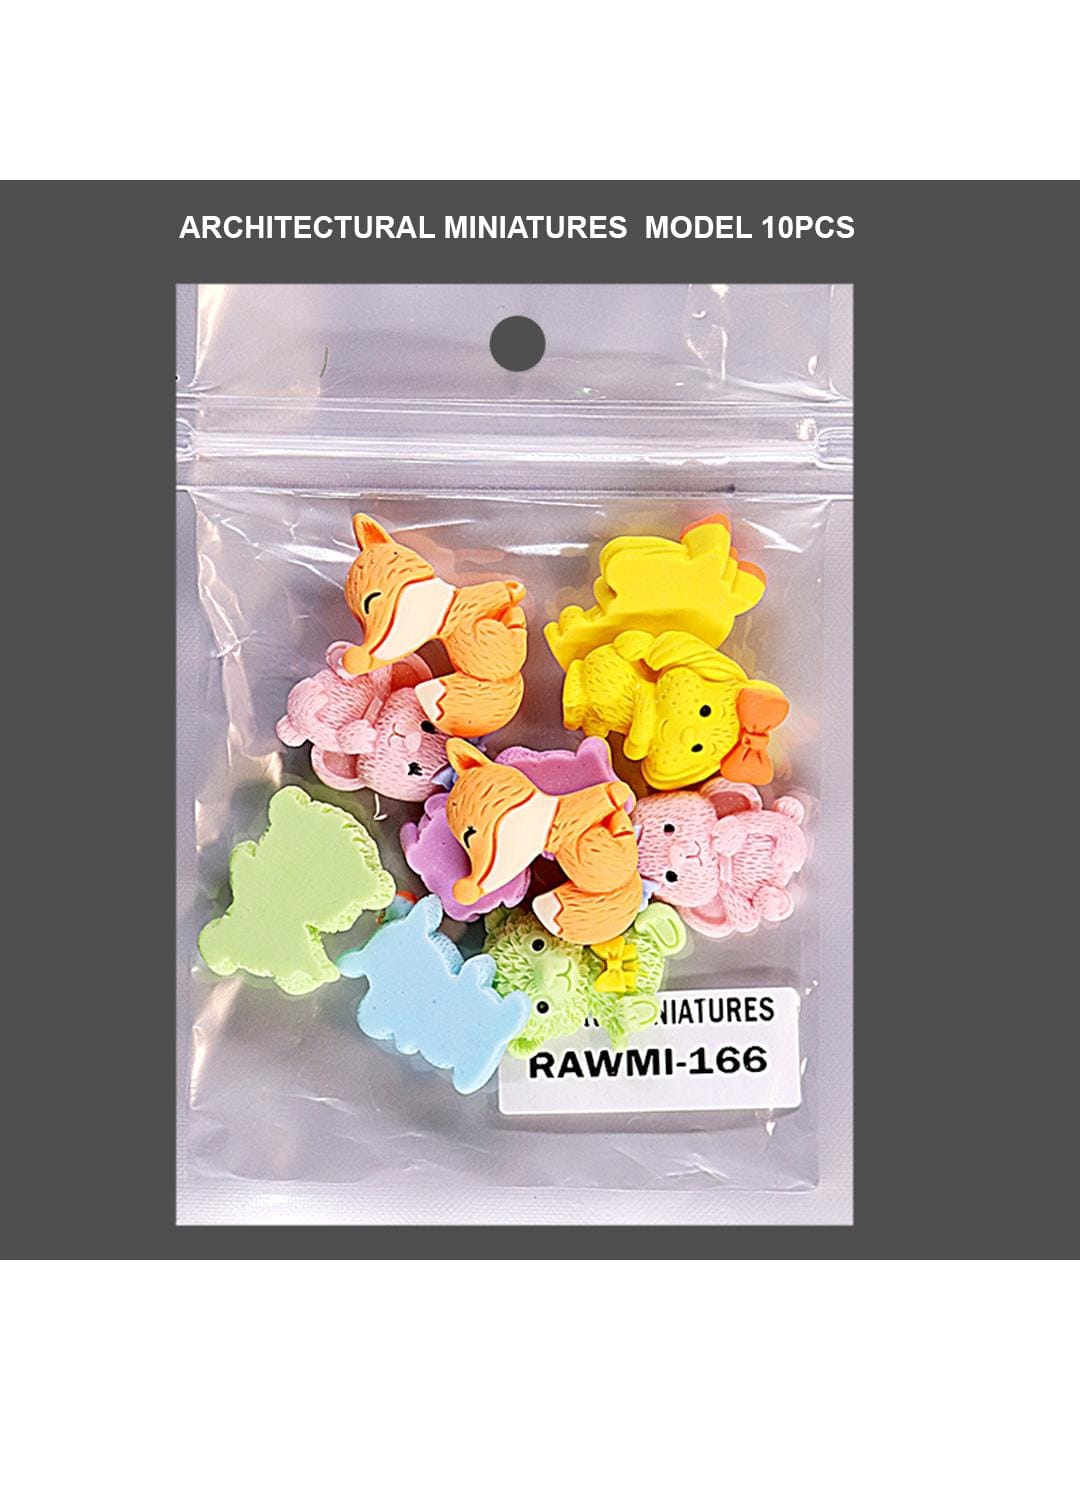 Architectural Model 10Pcs Rawmi-166 | INKARTO